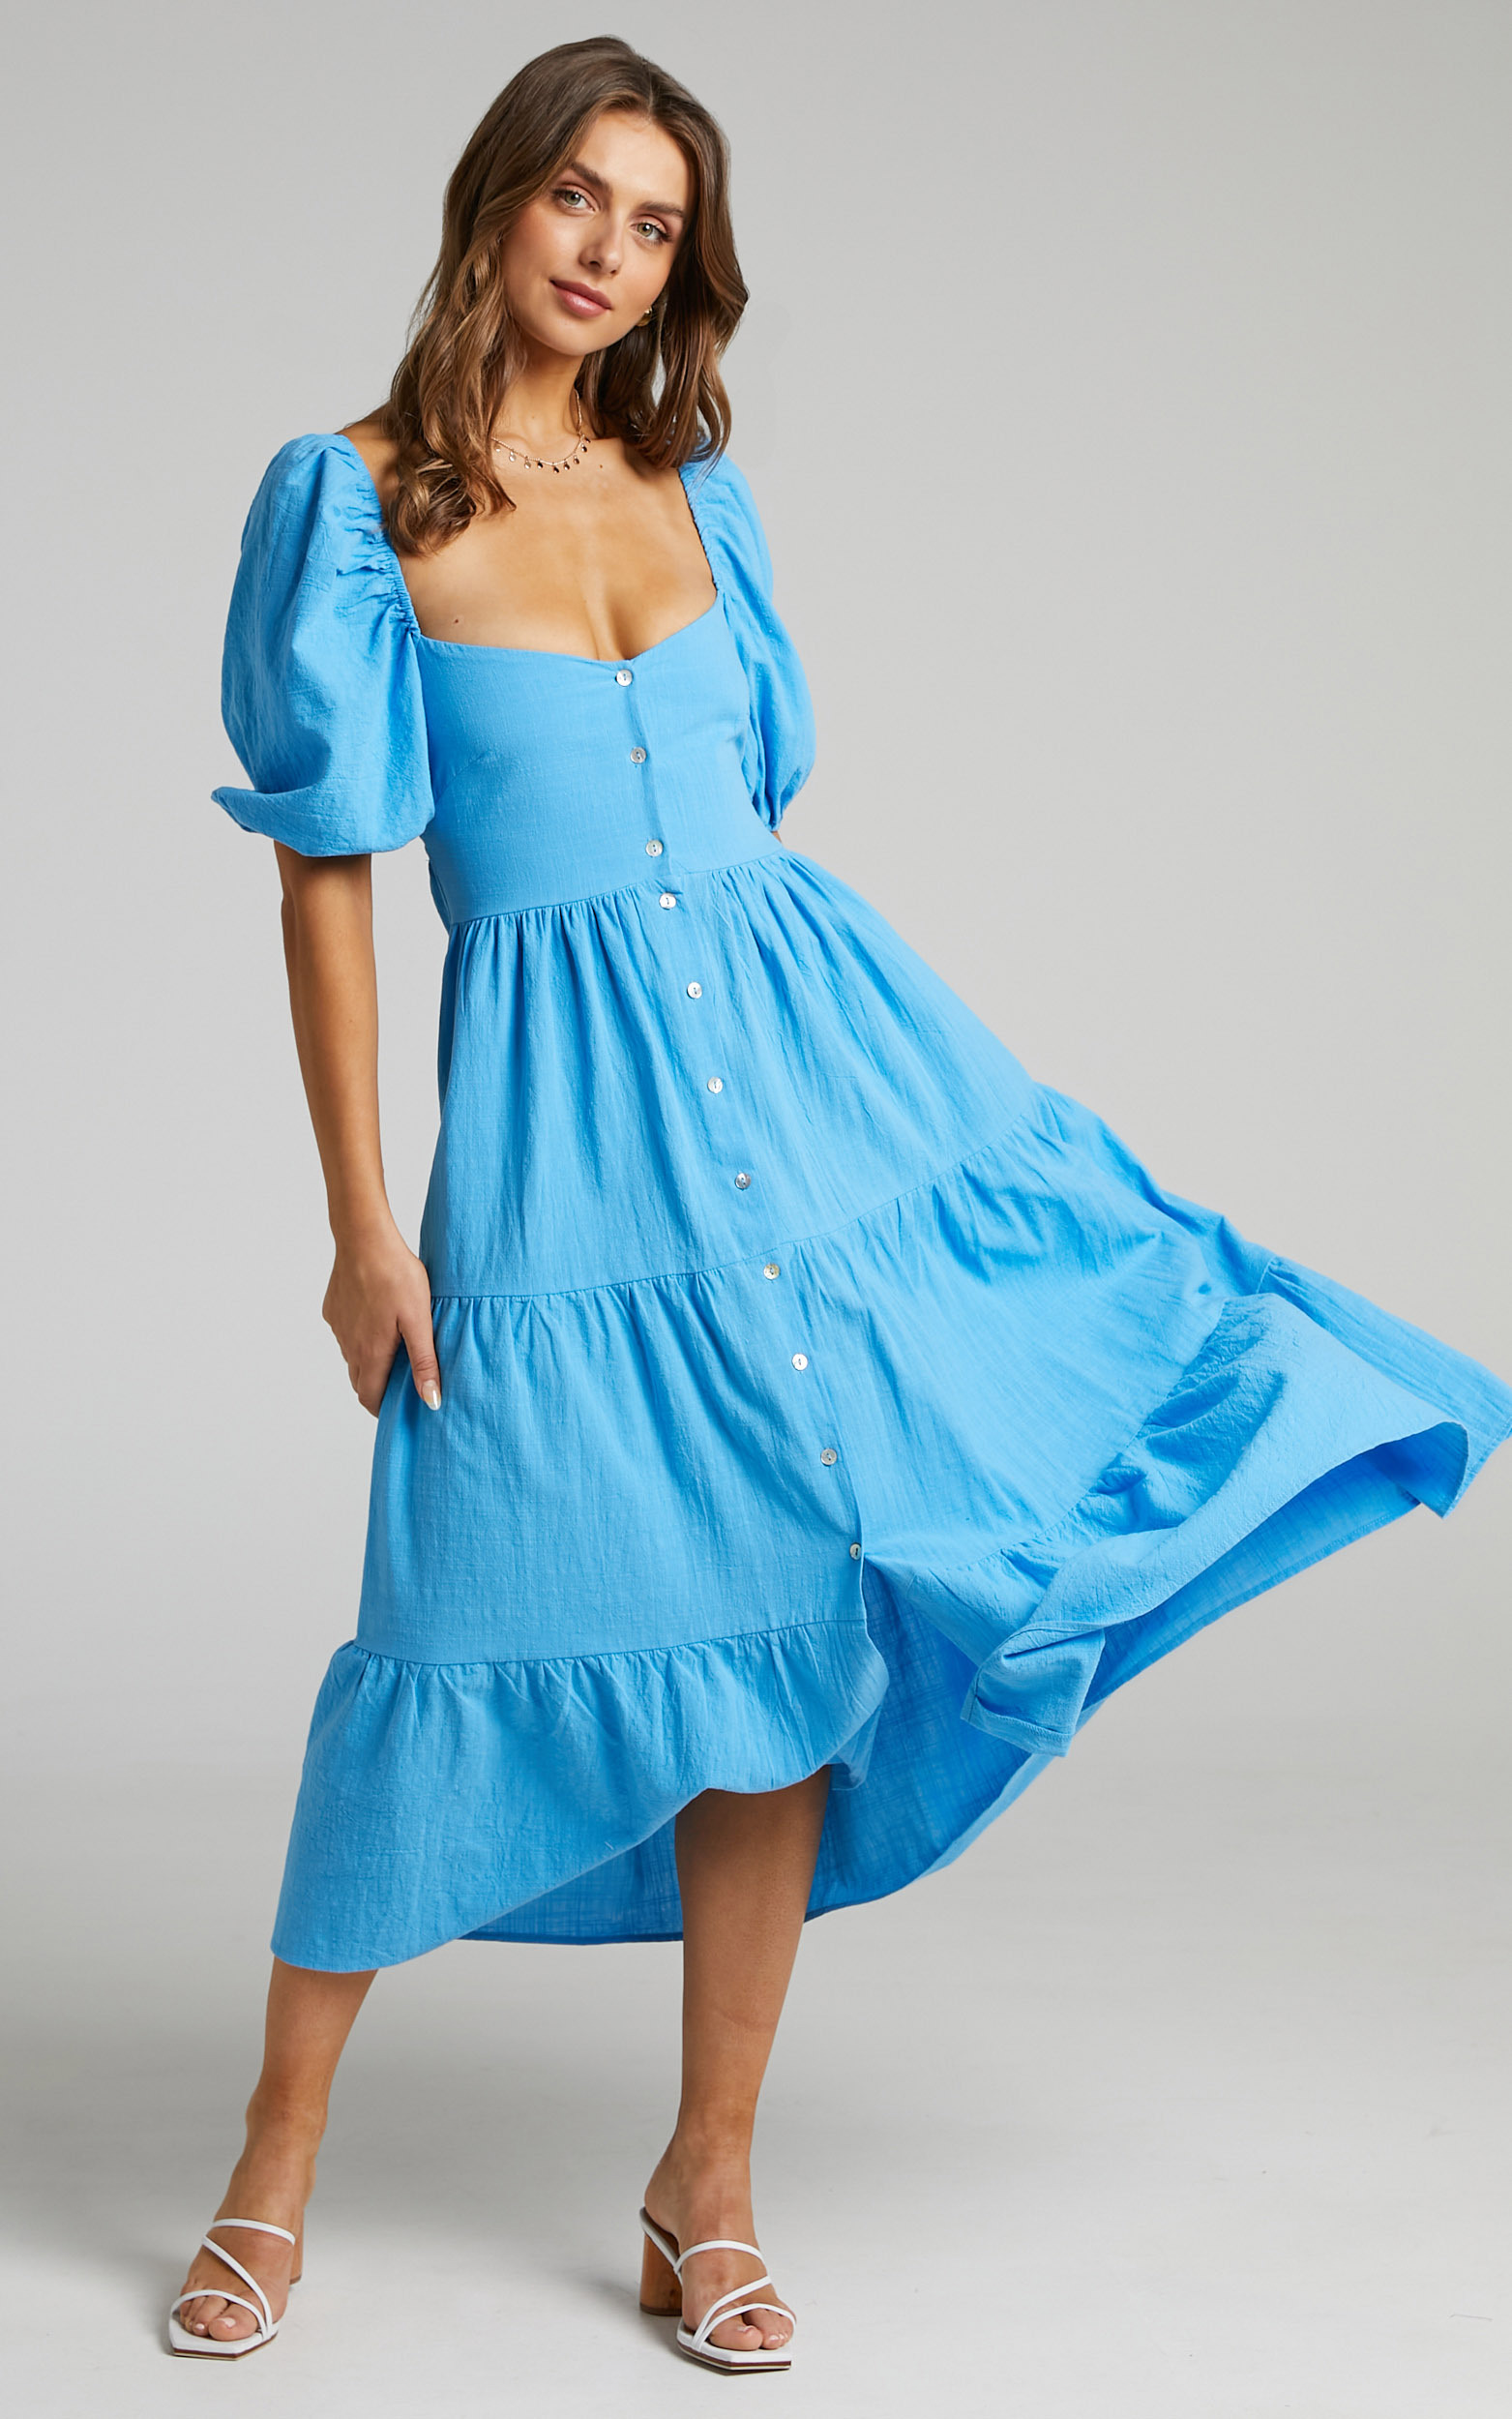 Palmer Dress in Bright Blue - 04, BLU1, hi-res image number null